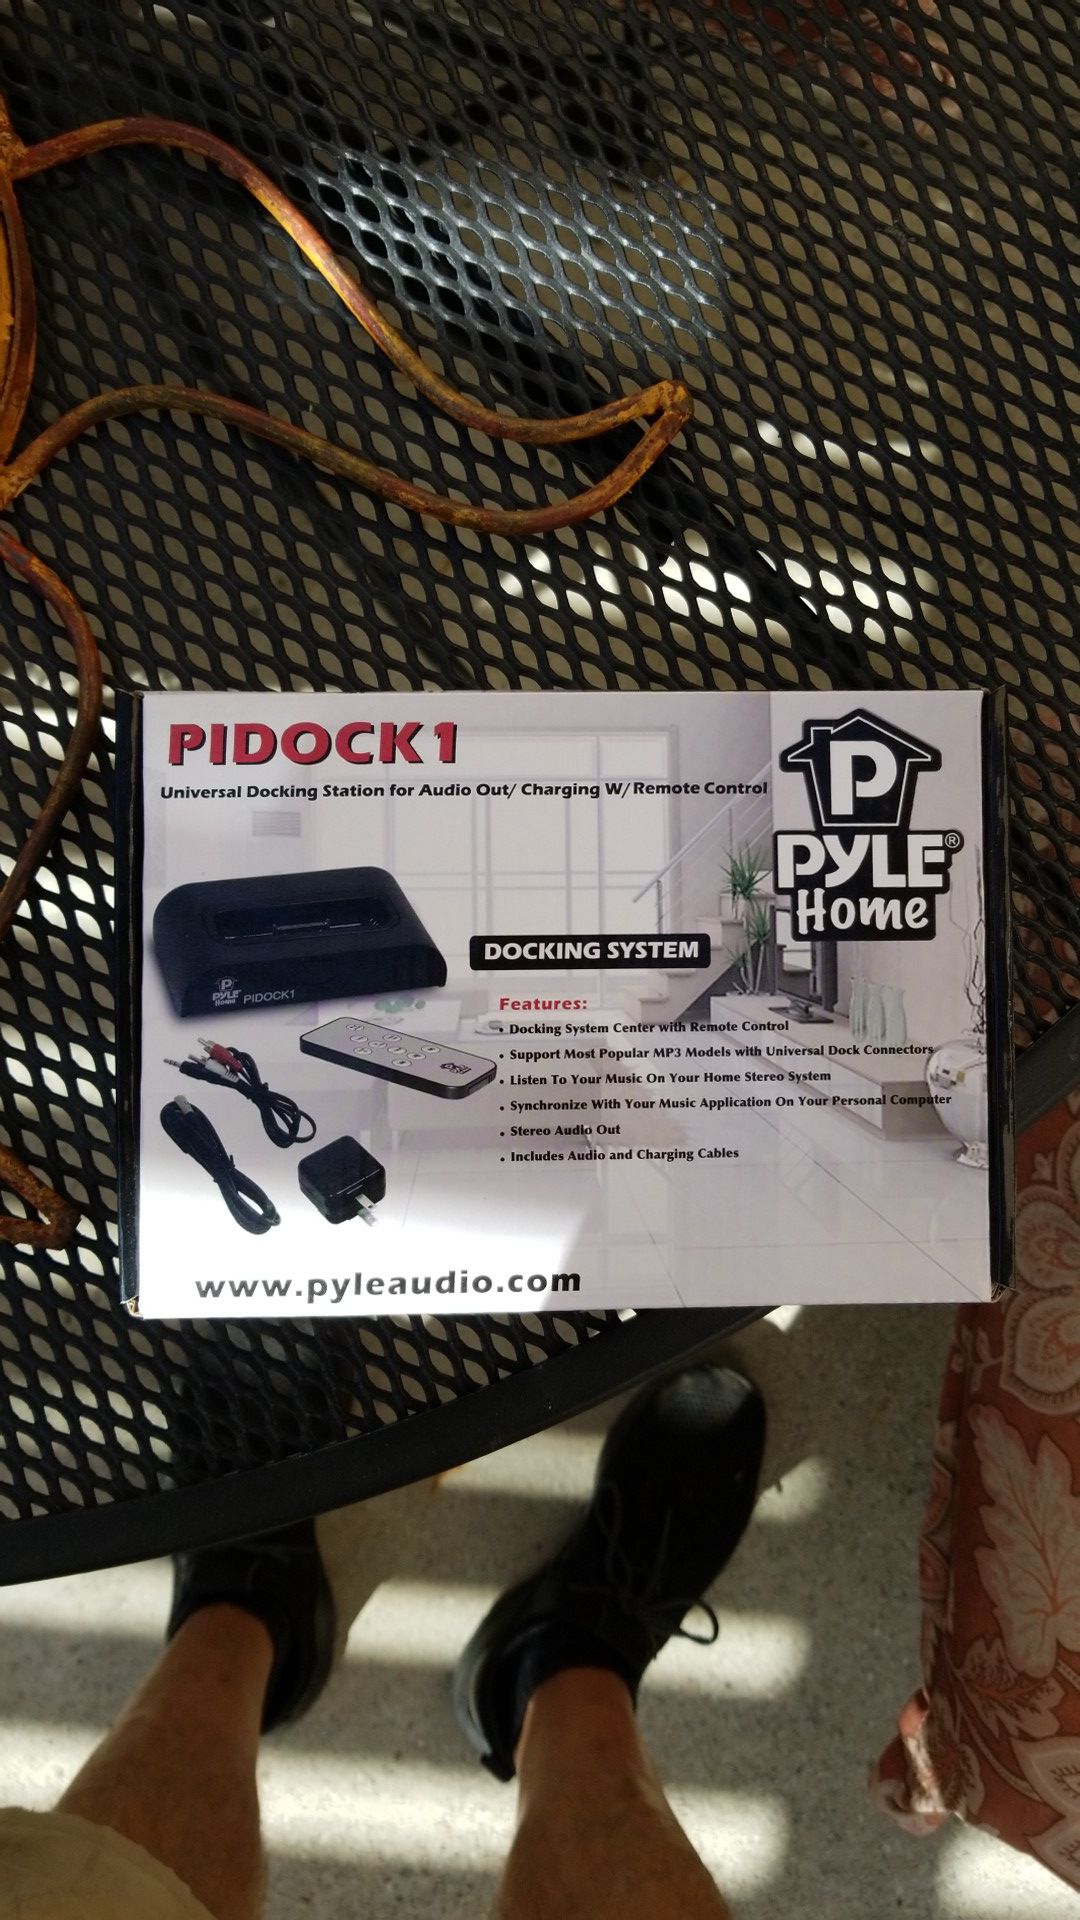 iPod Pyle Home Docking Station $10 obo